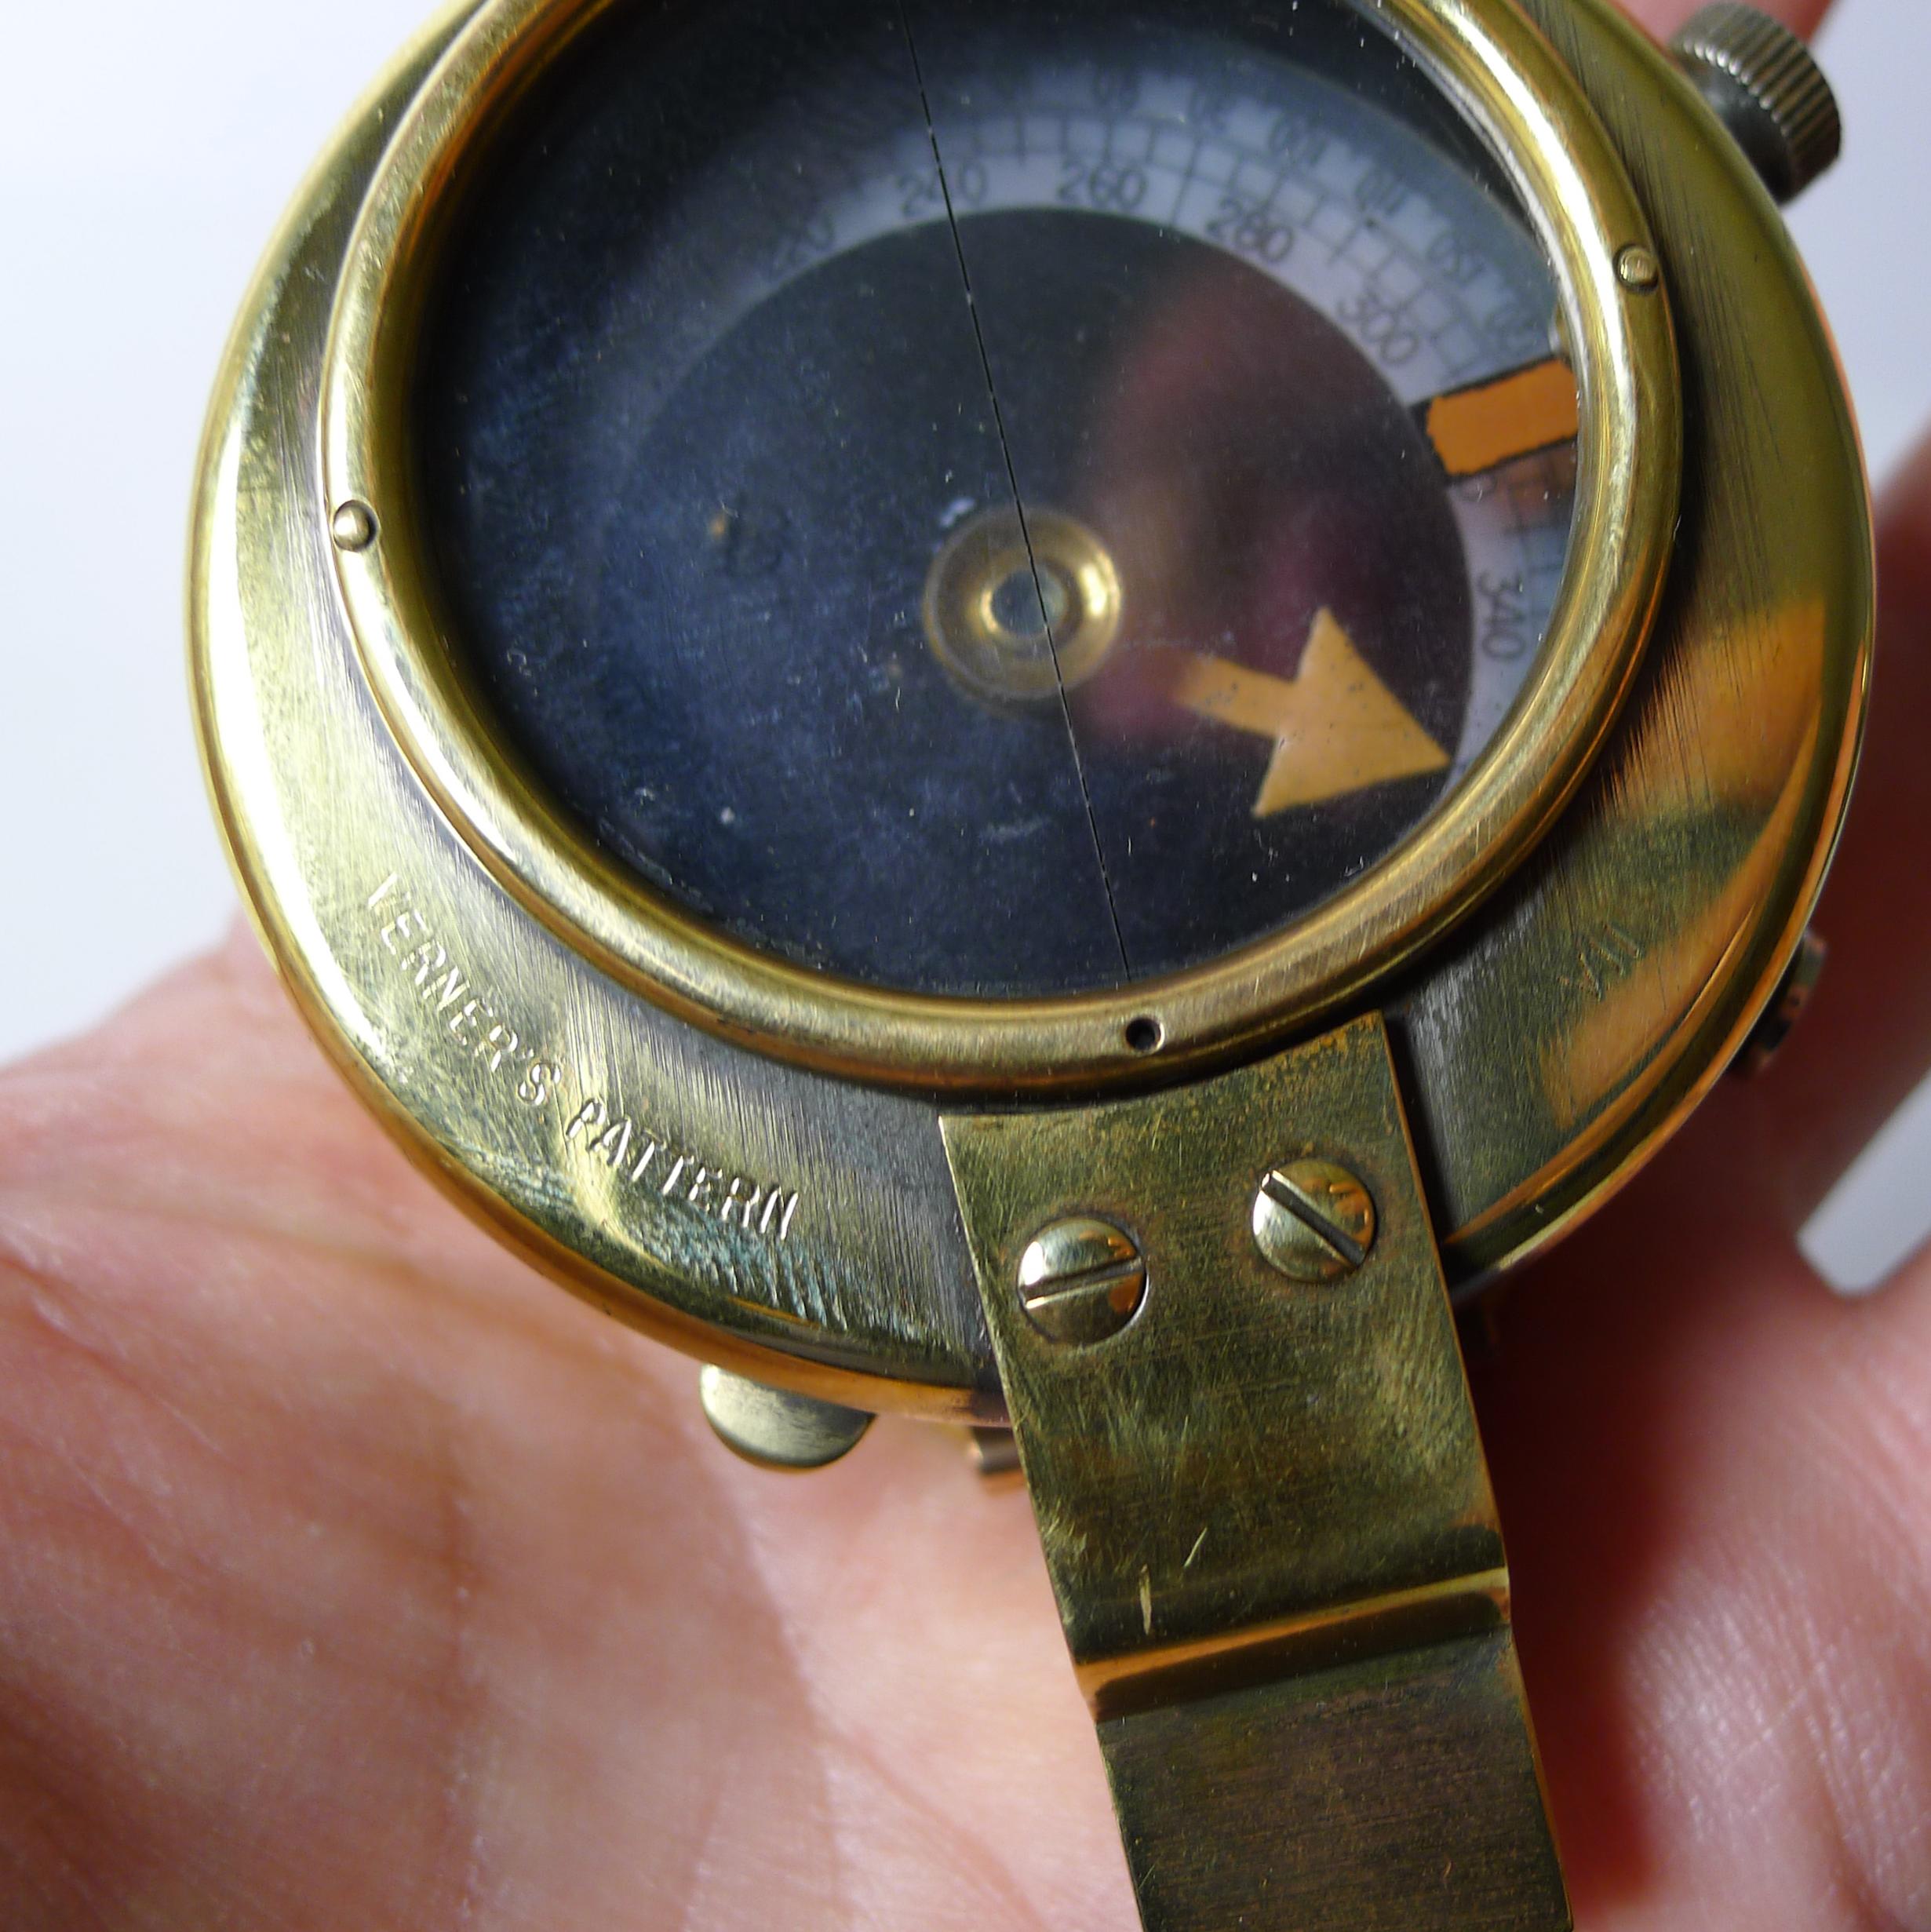 WW1 1915 British Army Officer's Compass - Verner's Patent MK VII by E. Koehn 1